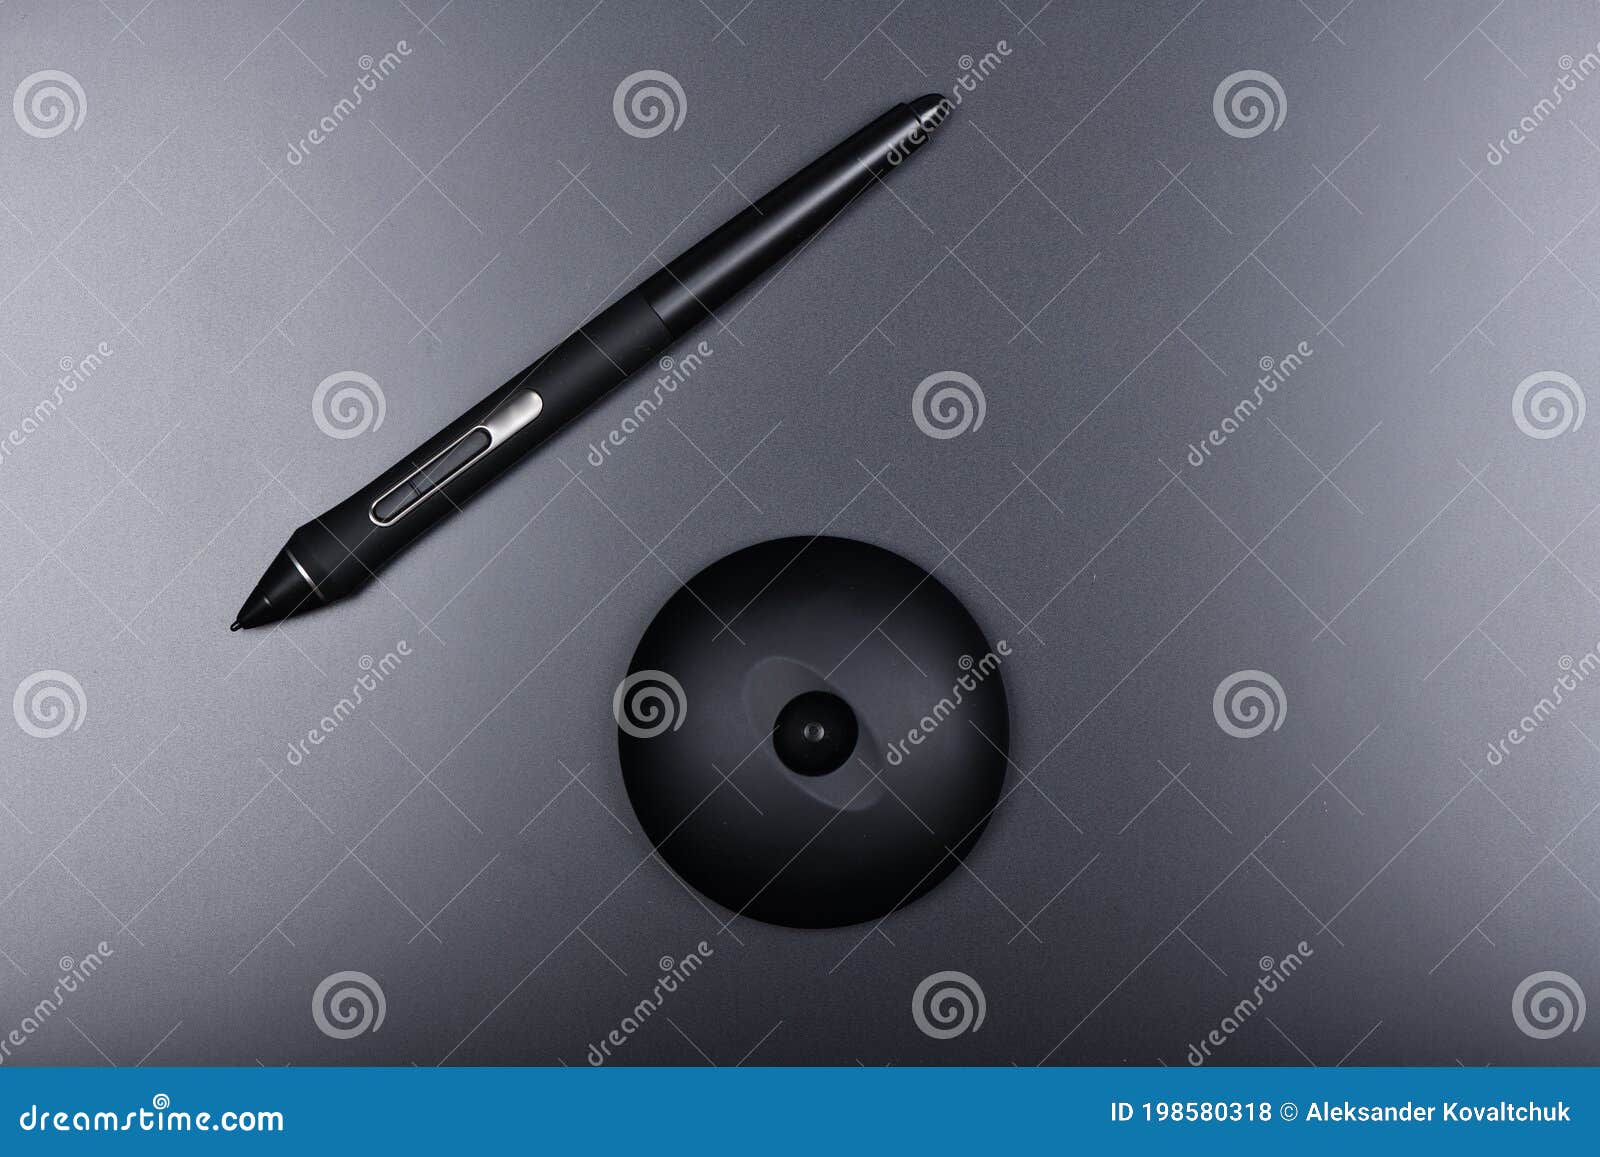 graphic  digitized pen